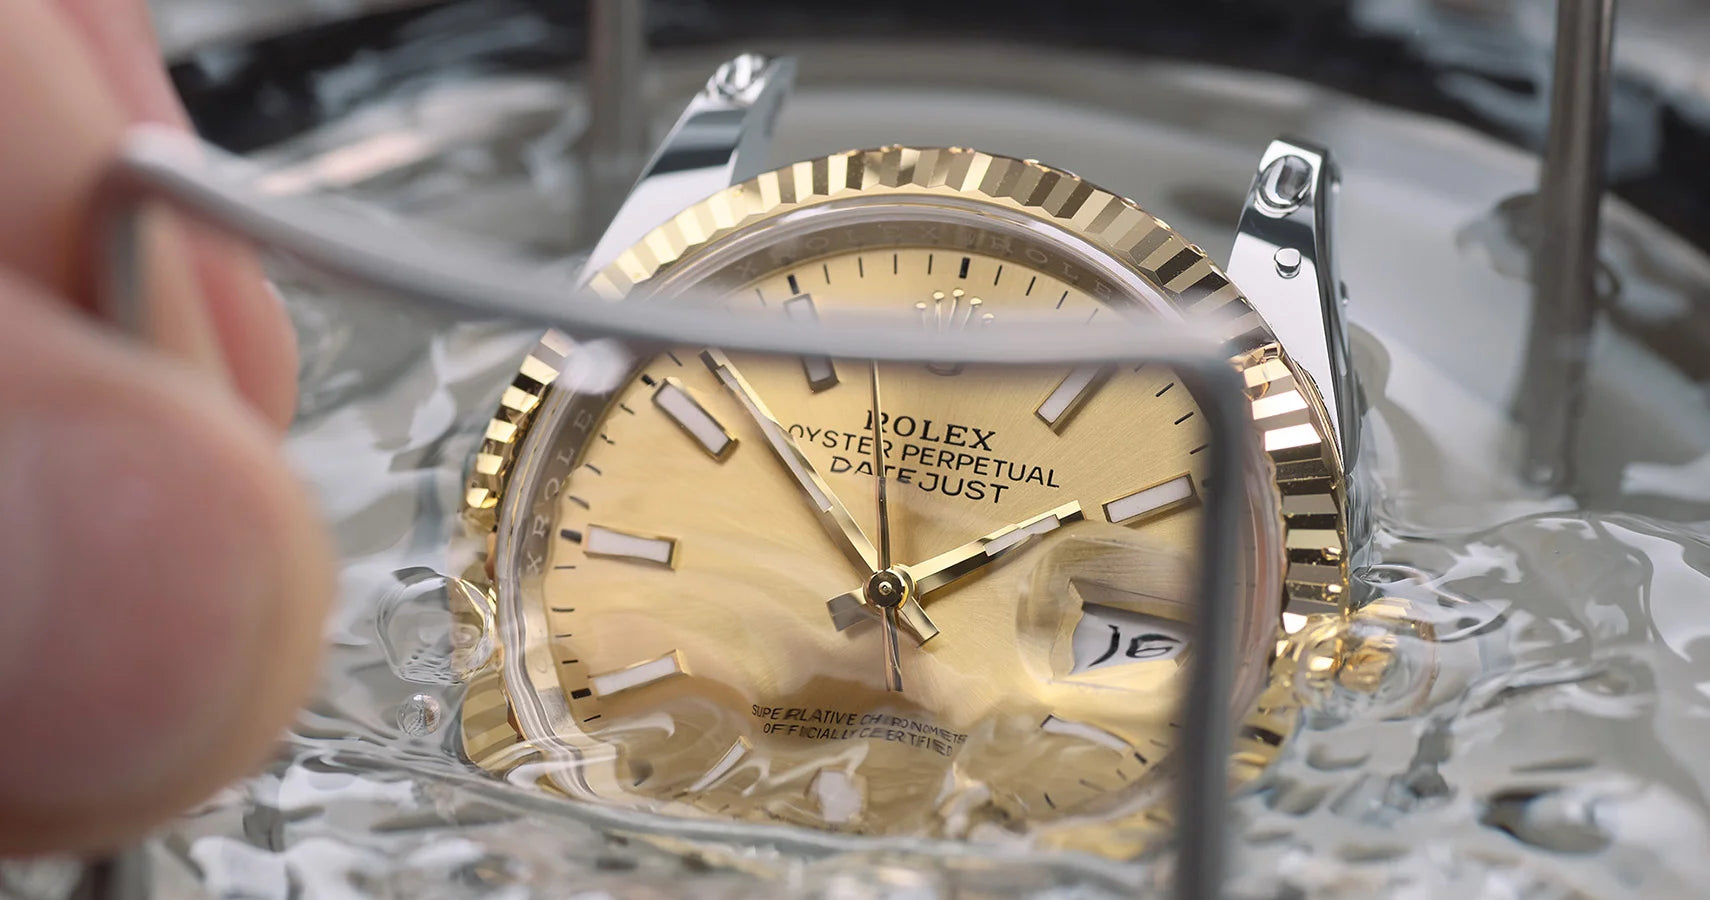 Rolex watches at BIJOUX Jewelers in Jamaica